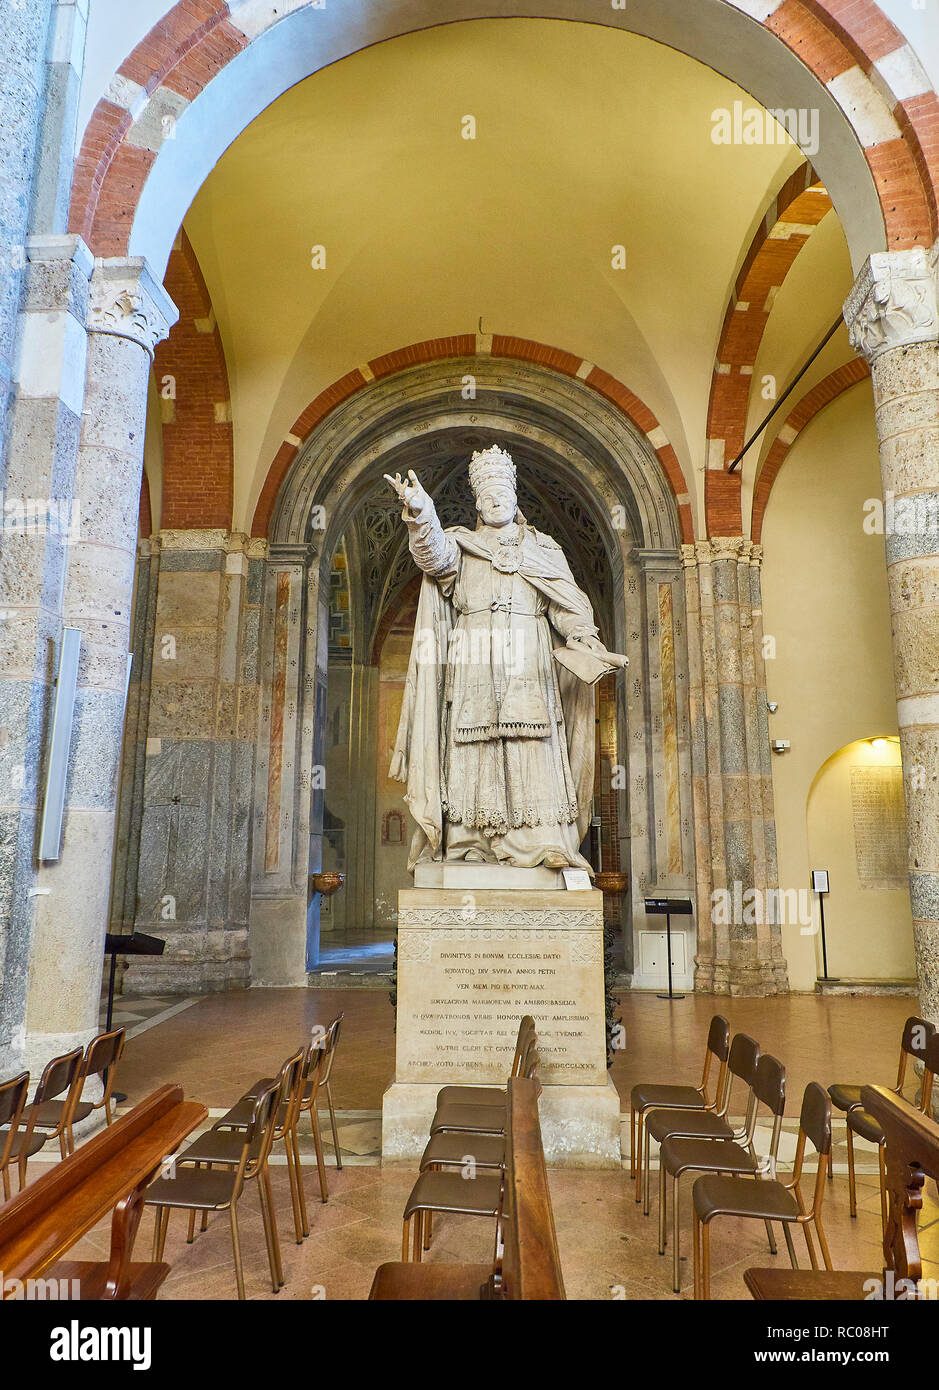 Mailand, Italien - 29. Dezember 2018. Statue von Papst Pius IX. in der Basilika Sant' Ambrogio. Mailand, Lombardei, Italien. Stockfoto